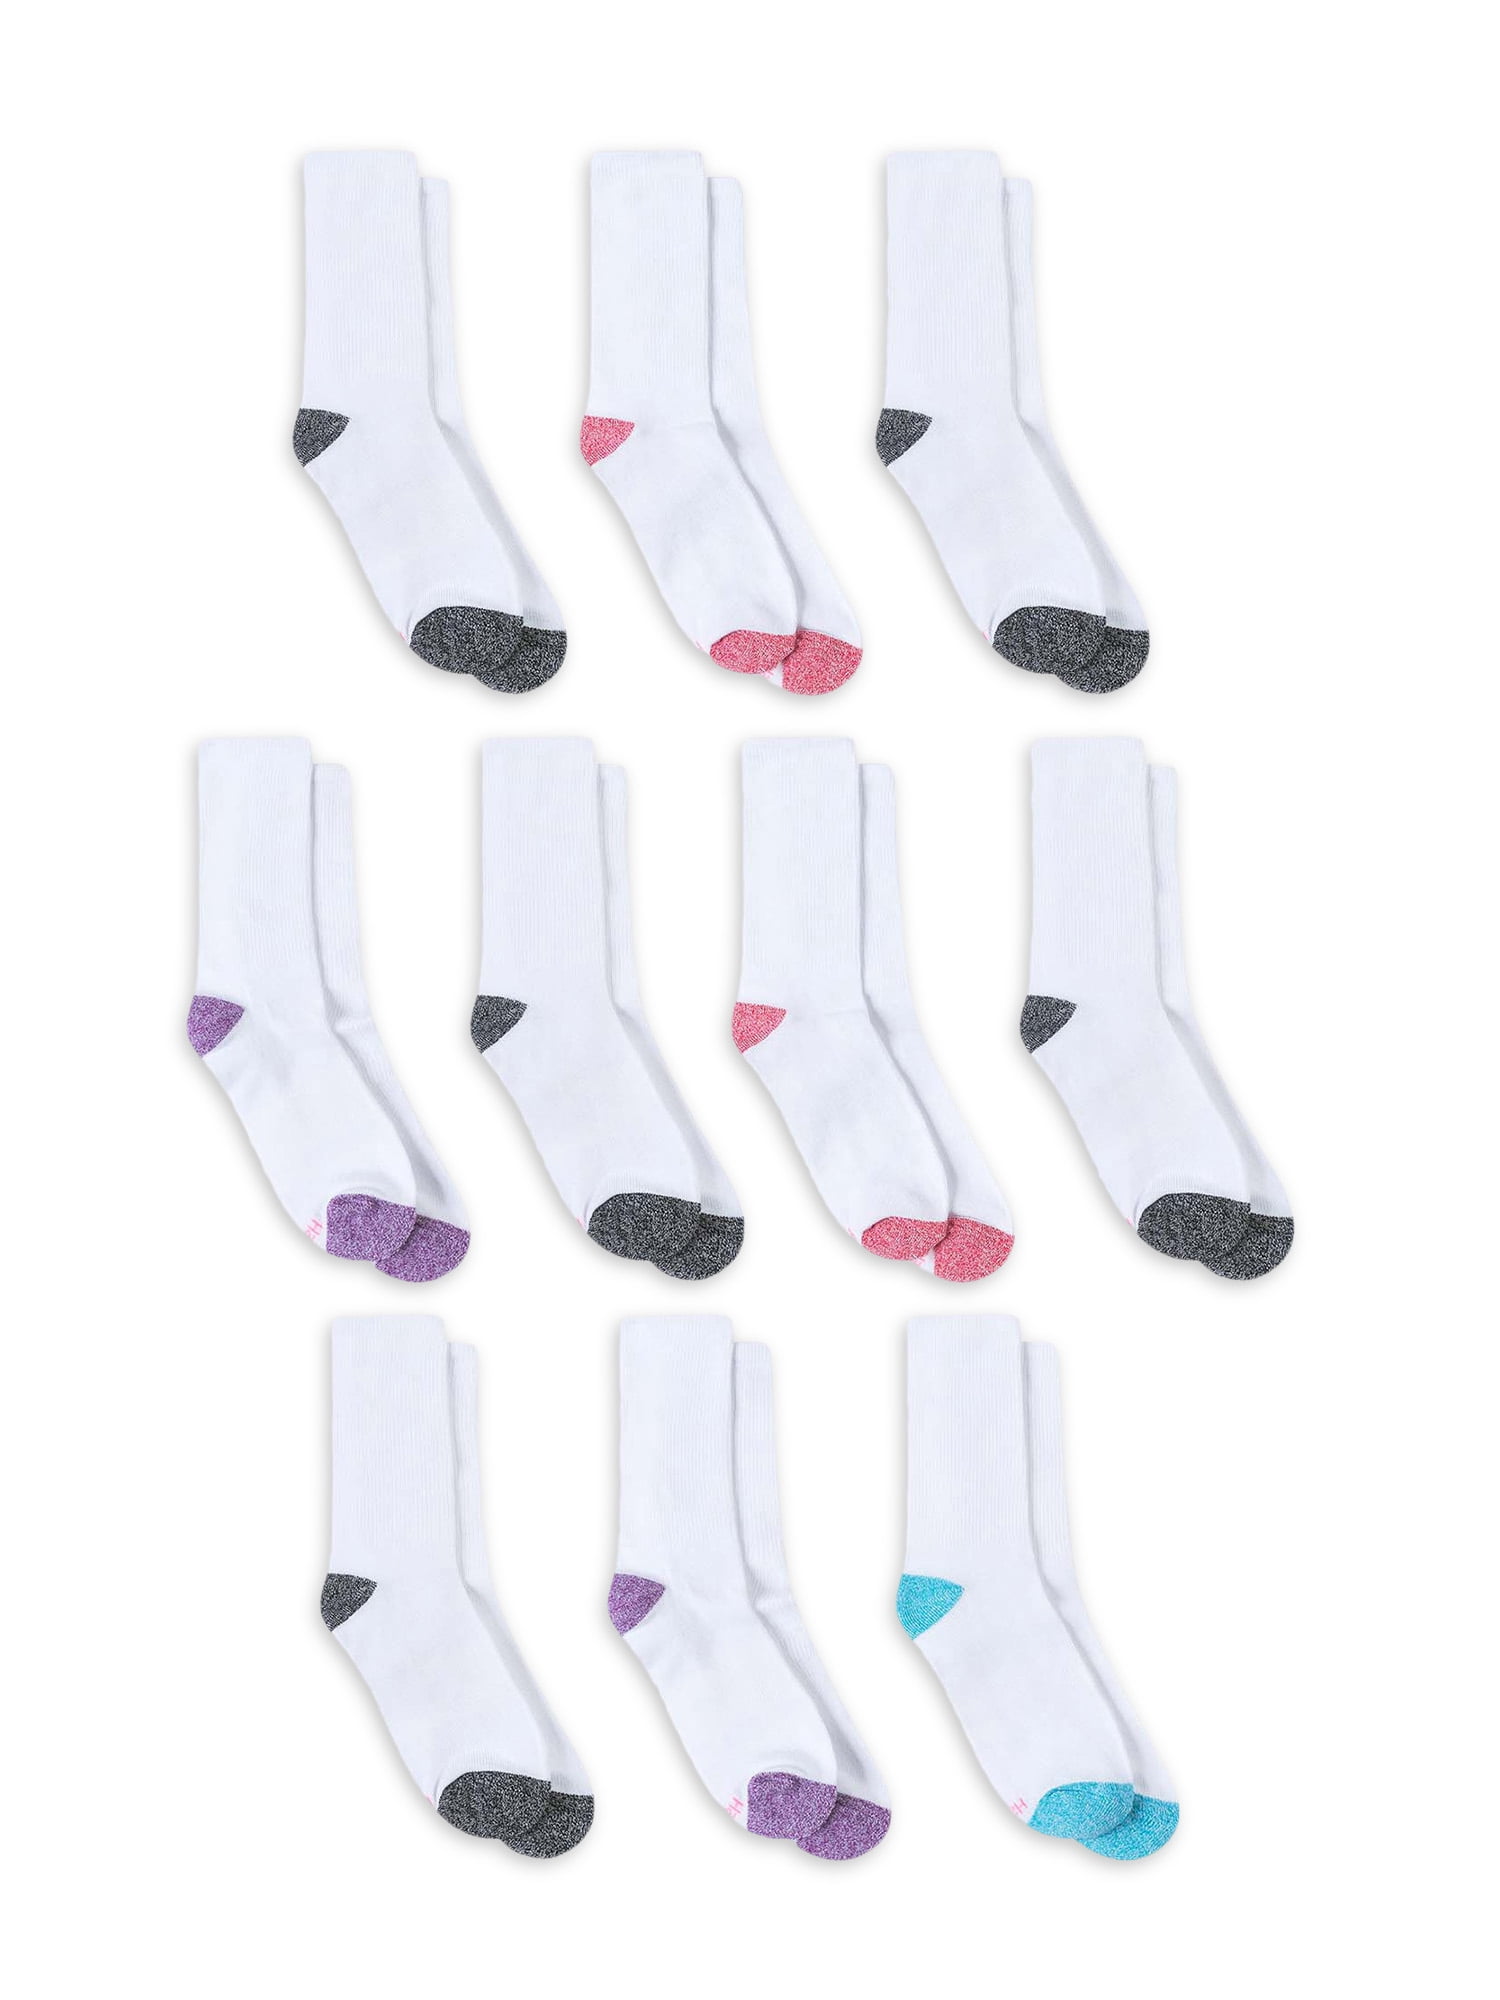 Hanes Women's Comfort Fit No Show Socks 10-pack 